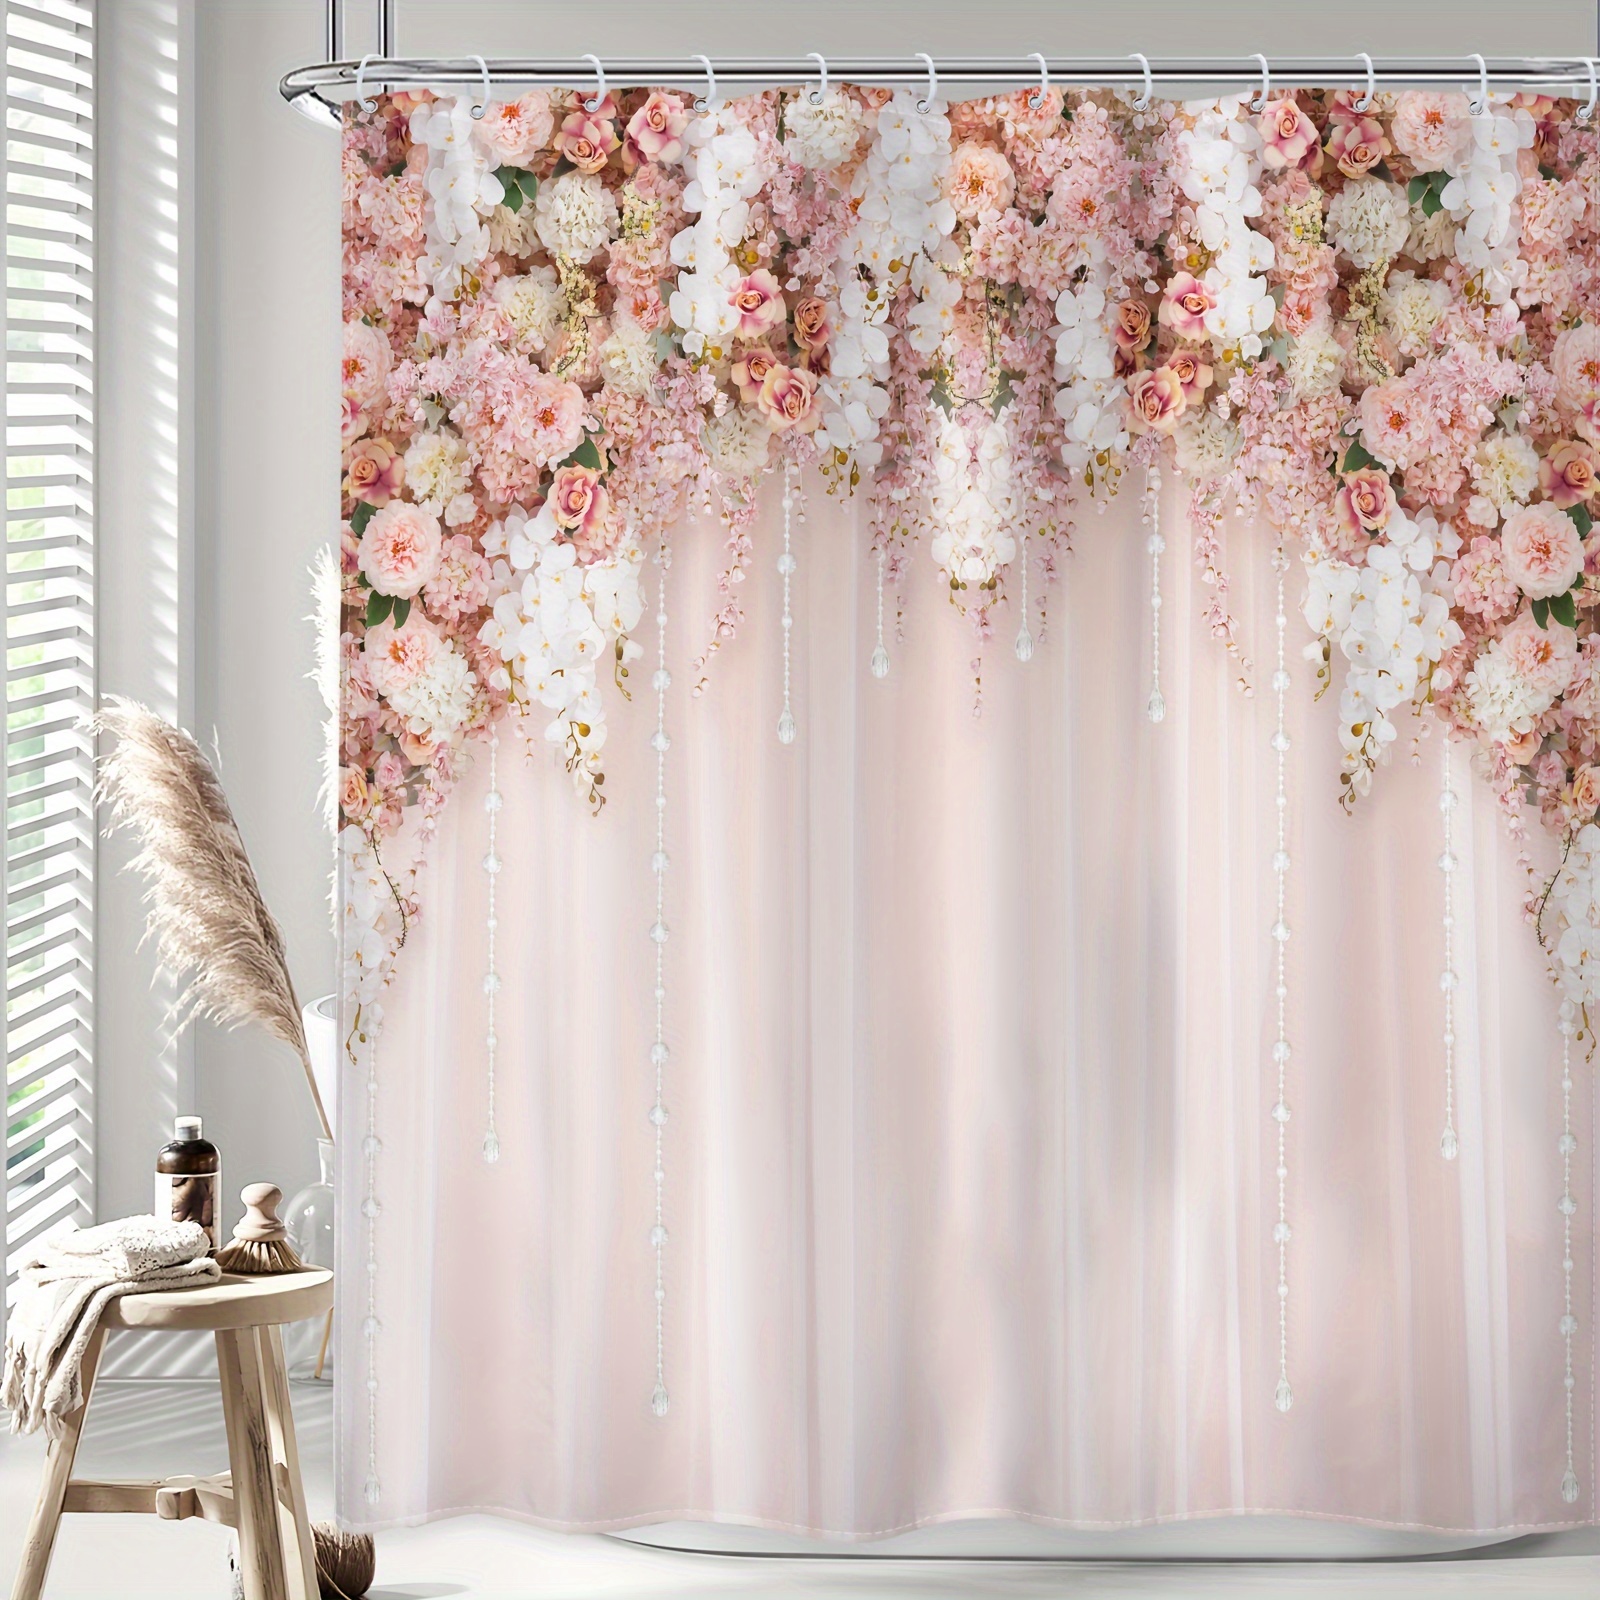 

1pc Bridal Floral Elegant Shower Curtain For Bathroom Decor, Wedding Flower Women Nature Floral Art Printed Bathroom Home Decor Fabric, Polyester Waterproof, 12 Pack Plastic Hooks, 72wx72h